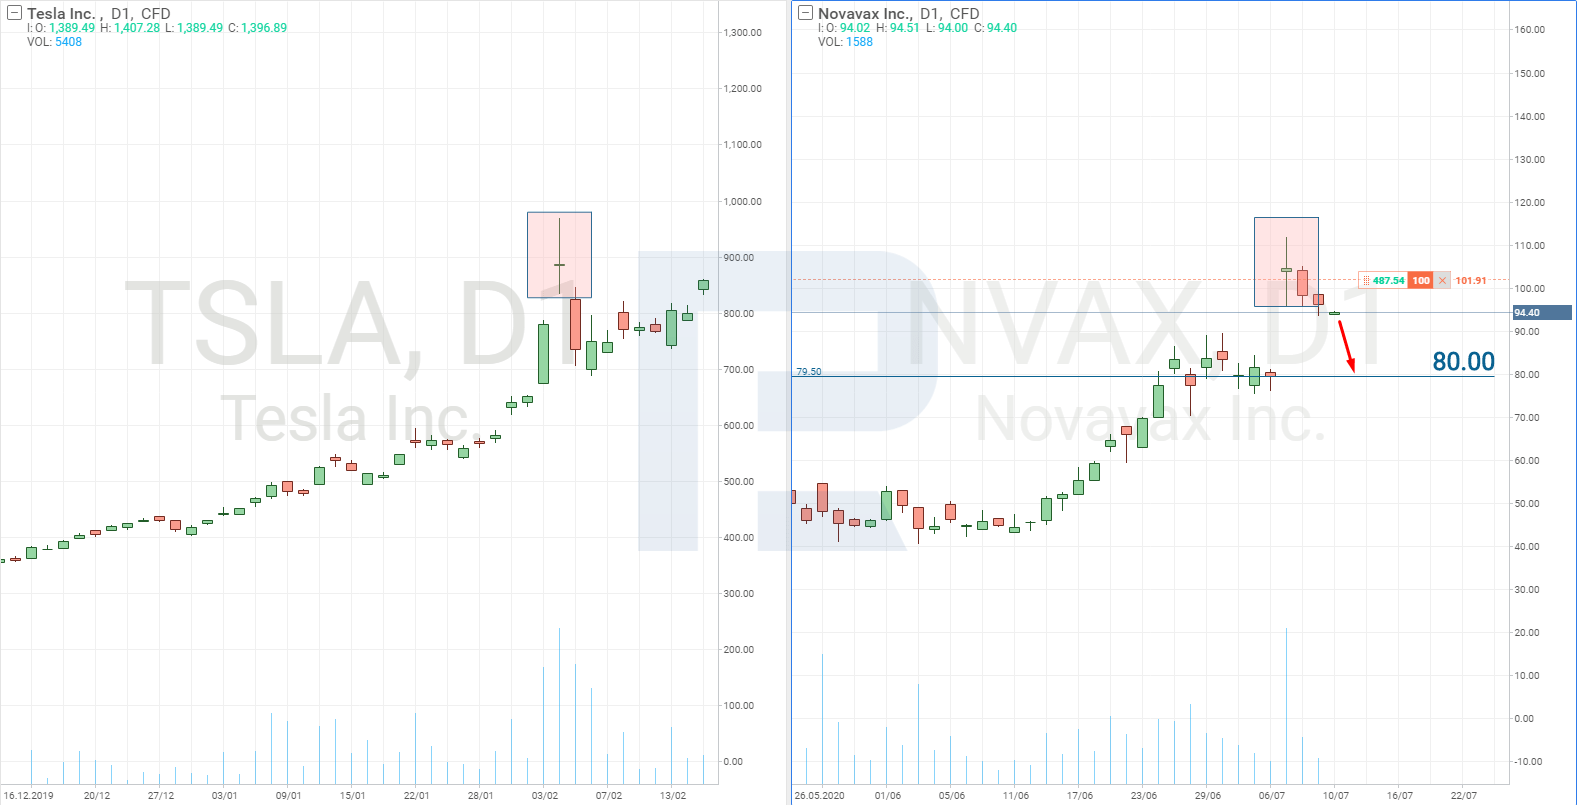 Nvax stock price forecast free forex expert advisors